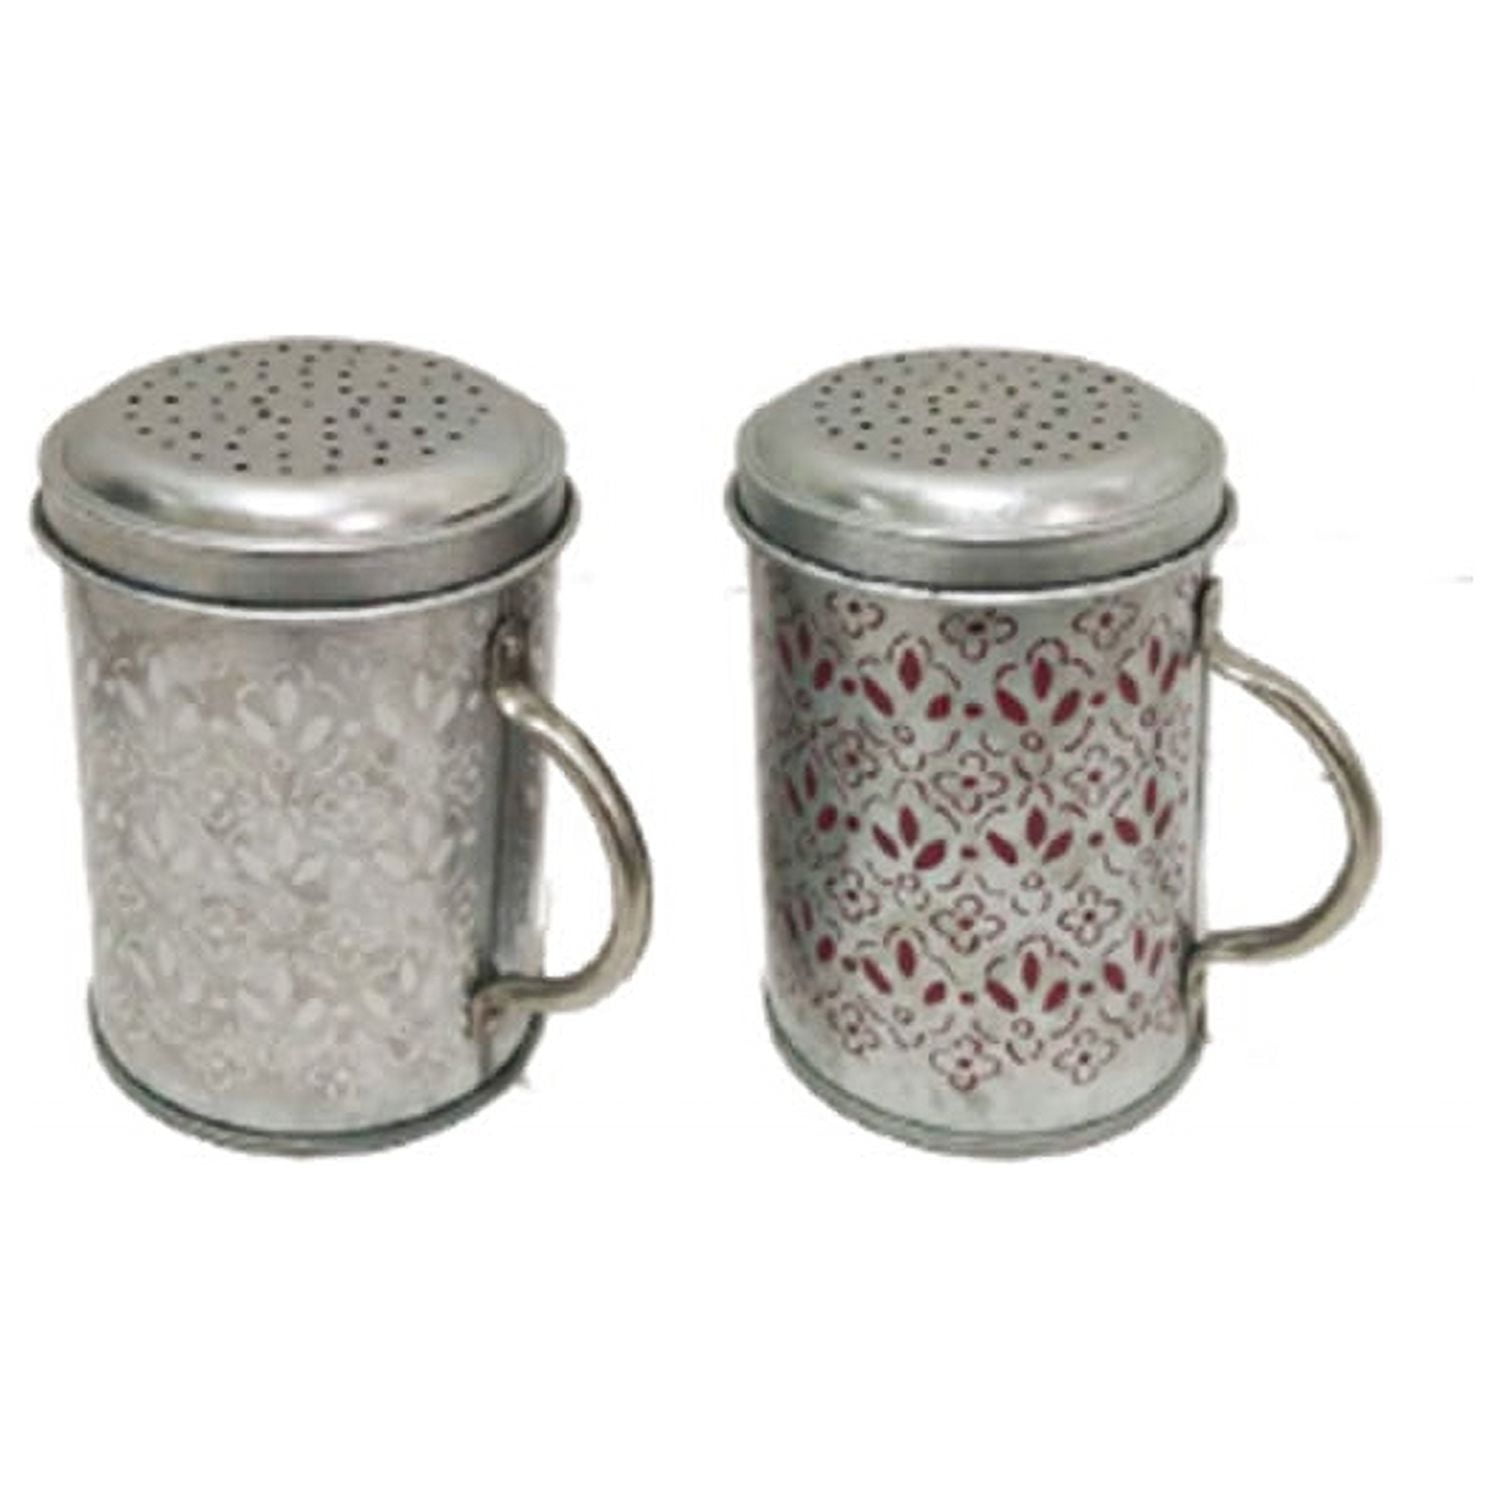 6 Sets Mini Salt & Pepper Shakers Pre-Filled & Refillable, Travel